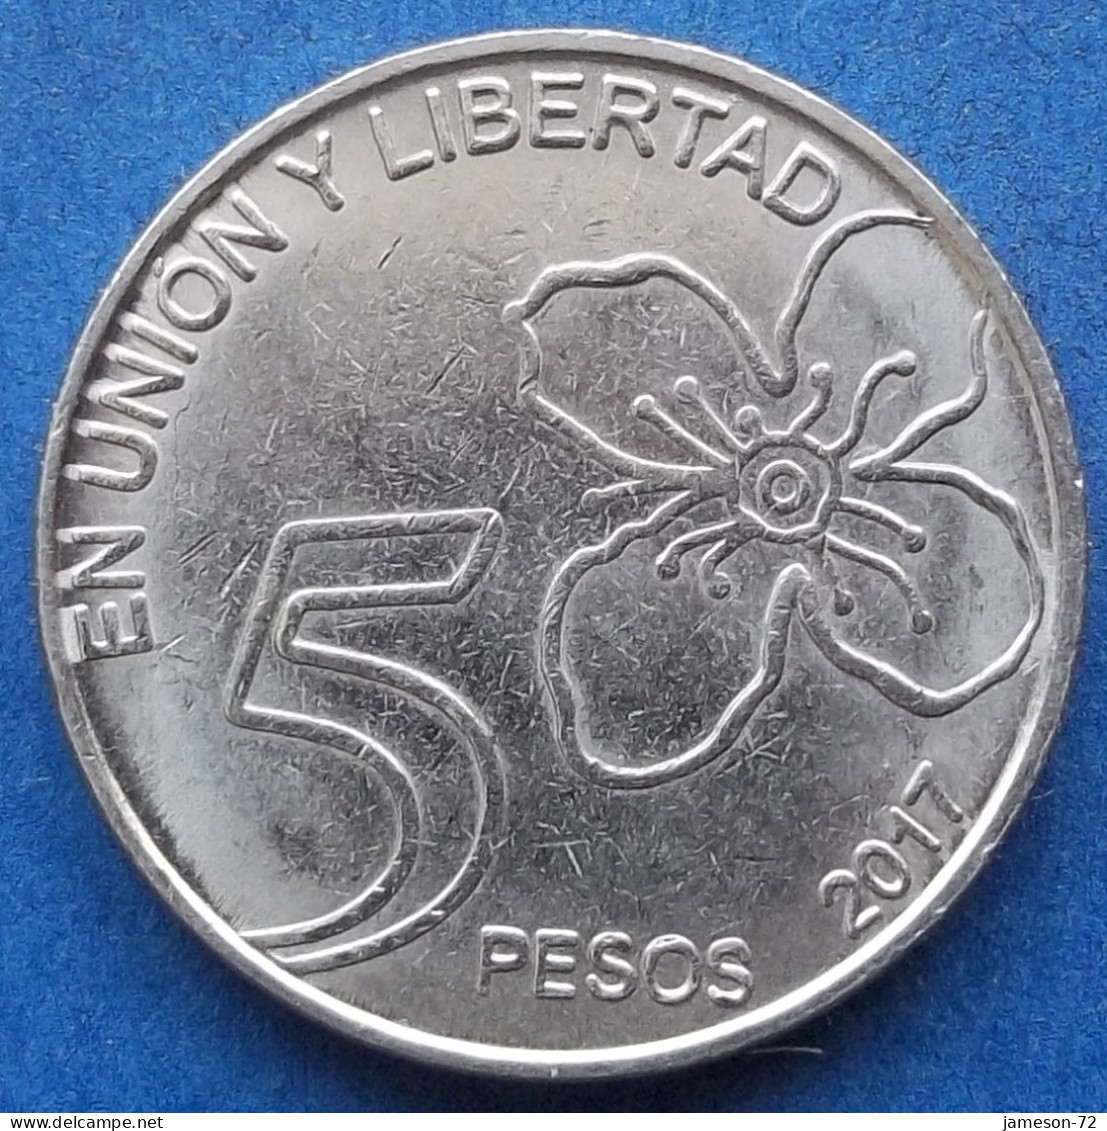 ARGENTINA - 5 Pesos 2017 "Arrayan" KM# 187 Monetary Reform (1992) - Edelweiss Coins - Argentine